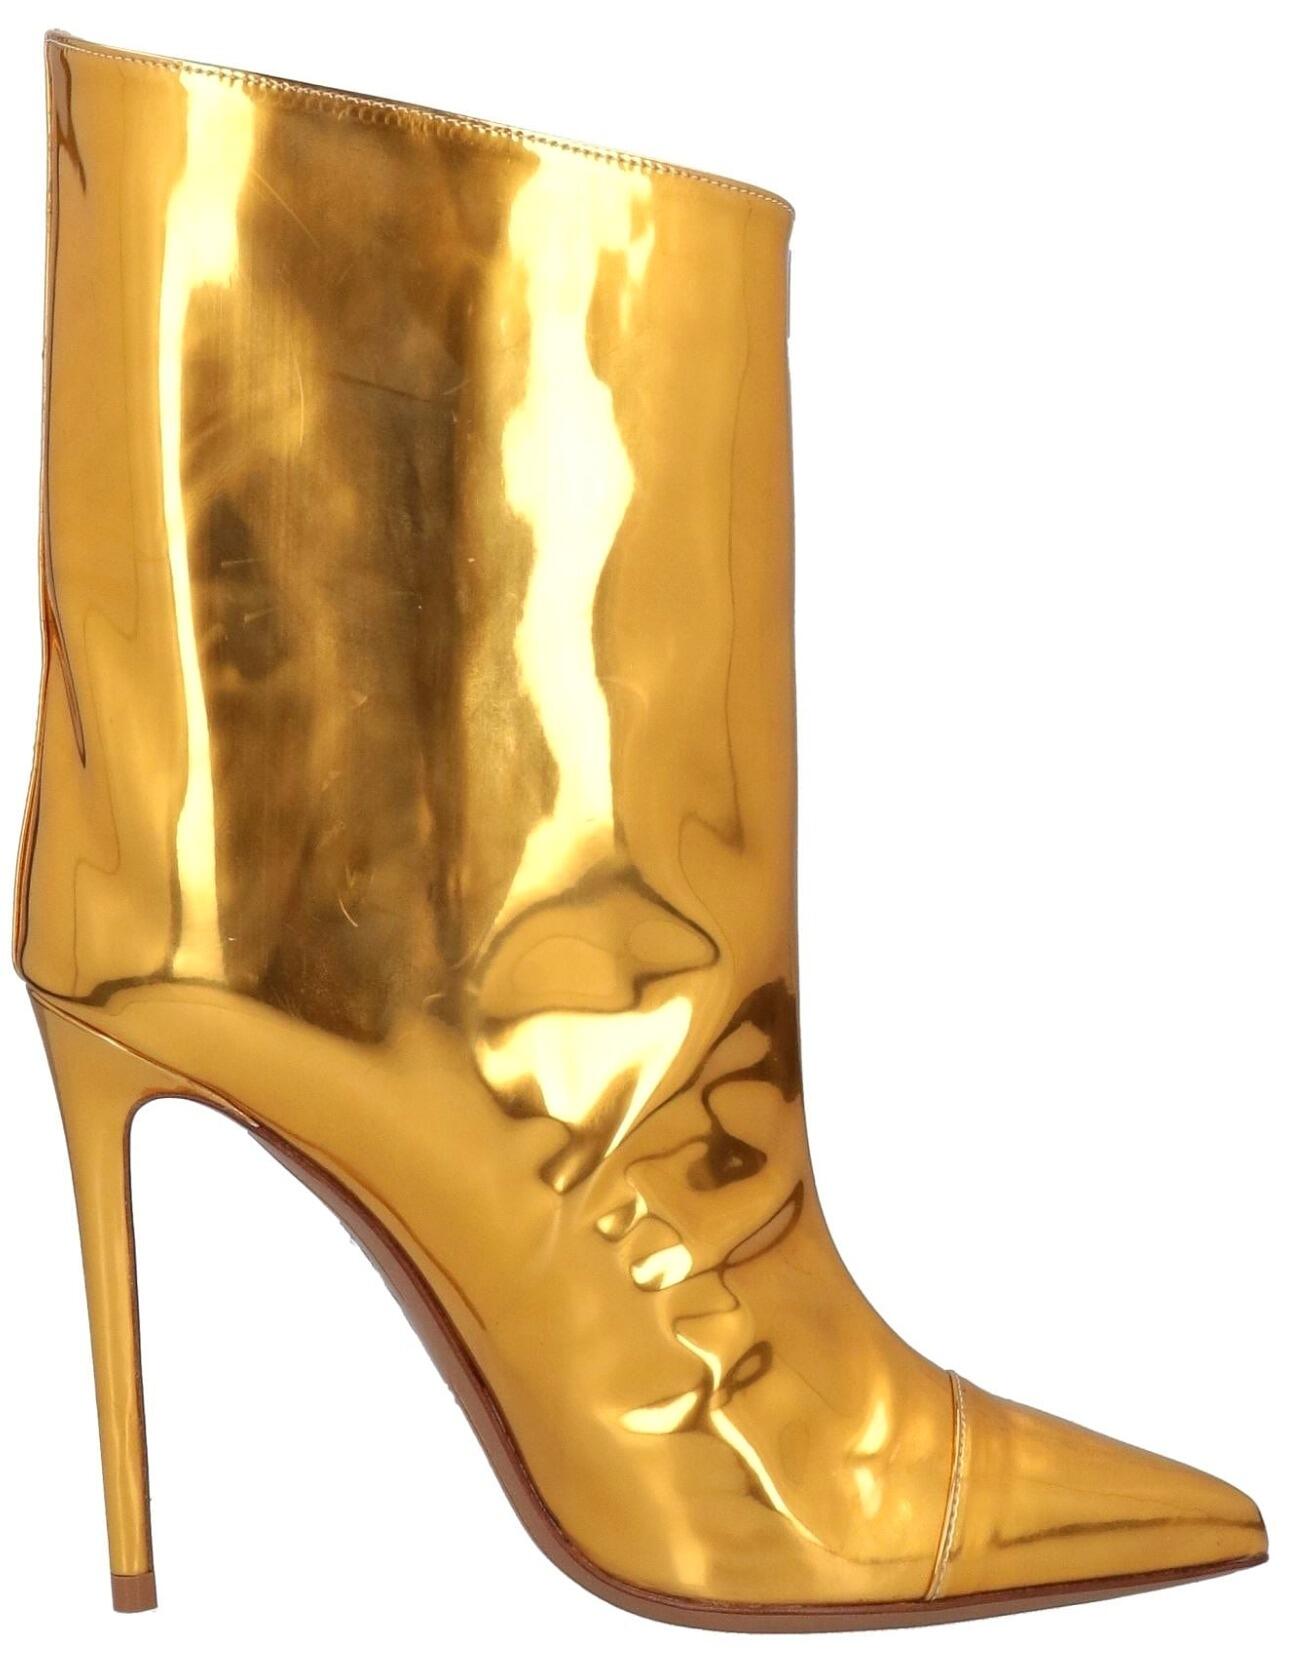 Boots (Gold Metallic) | style